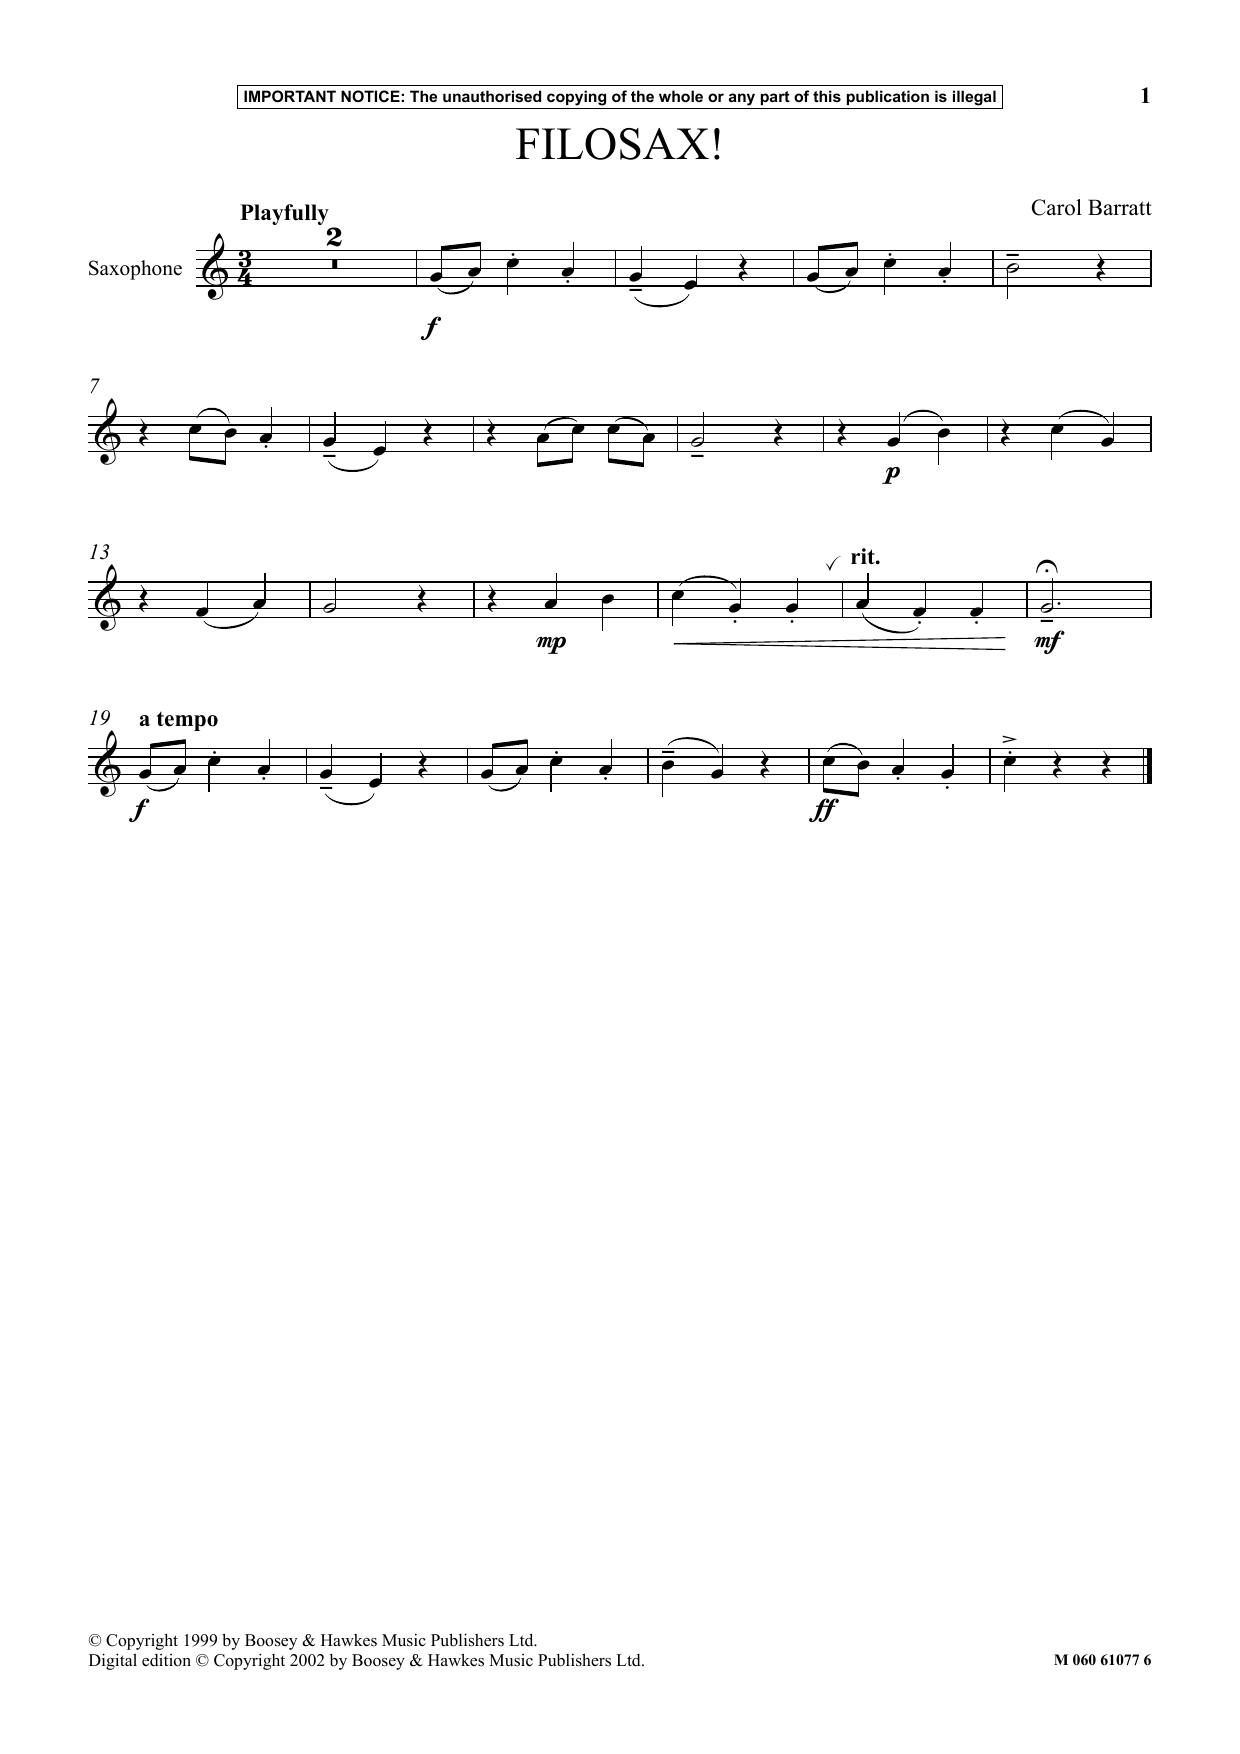 Download Carol Barratt Filosax! Sheet Music and learn how to play Instrumental Solo PDF digital score in minutes